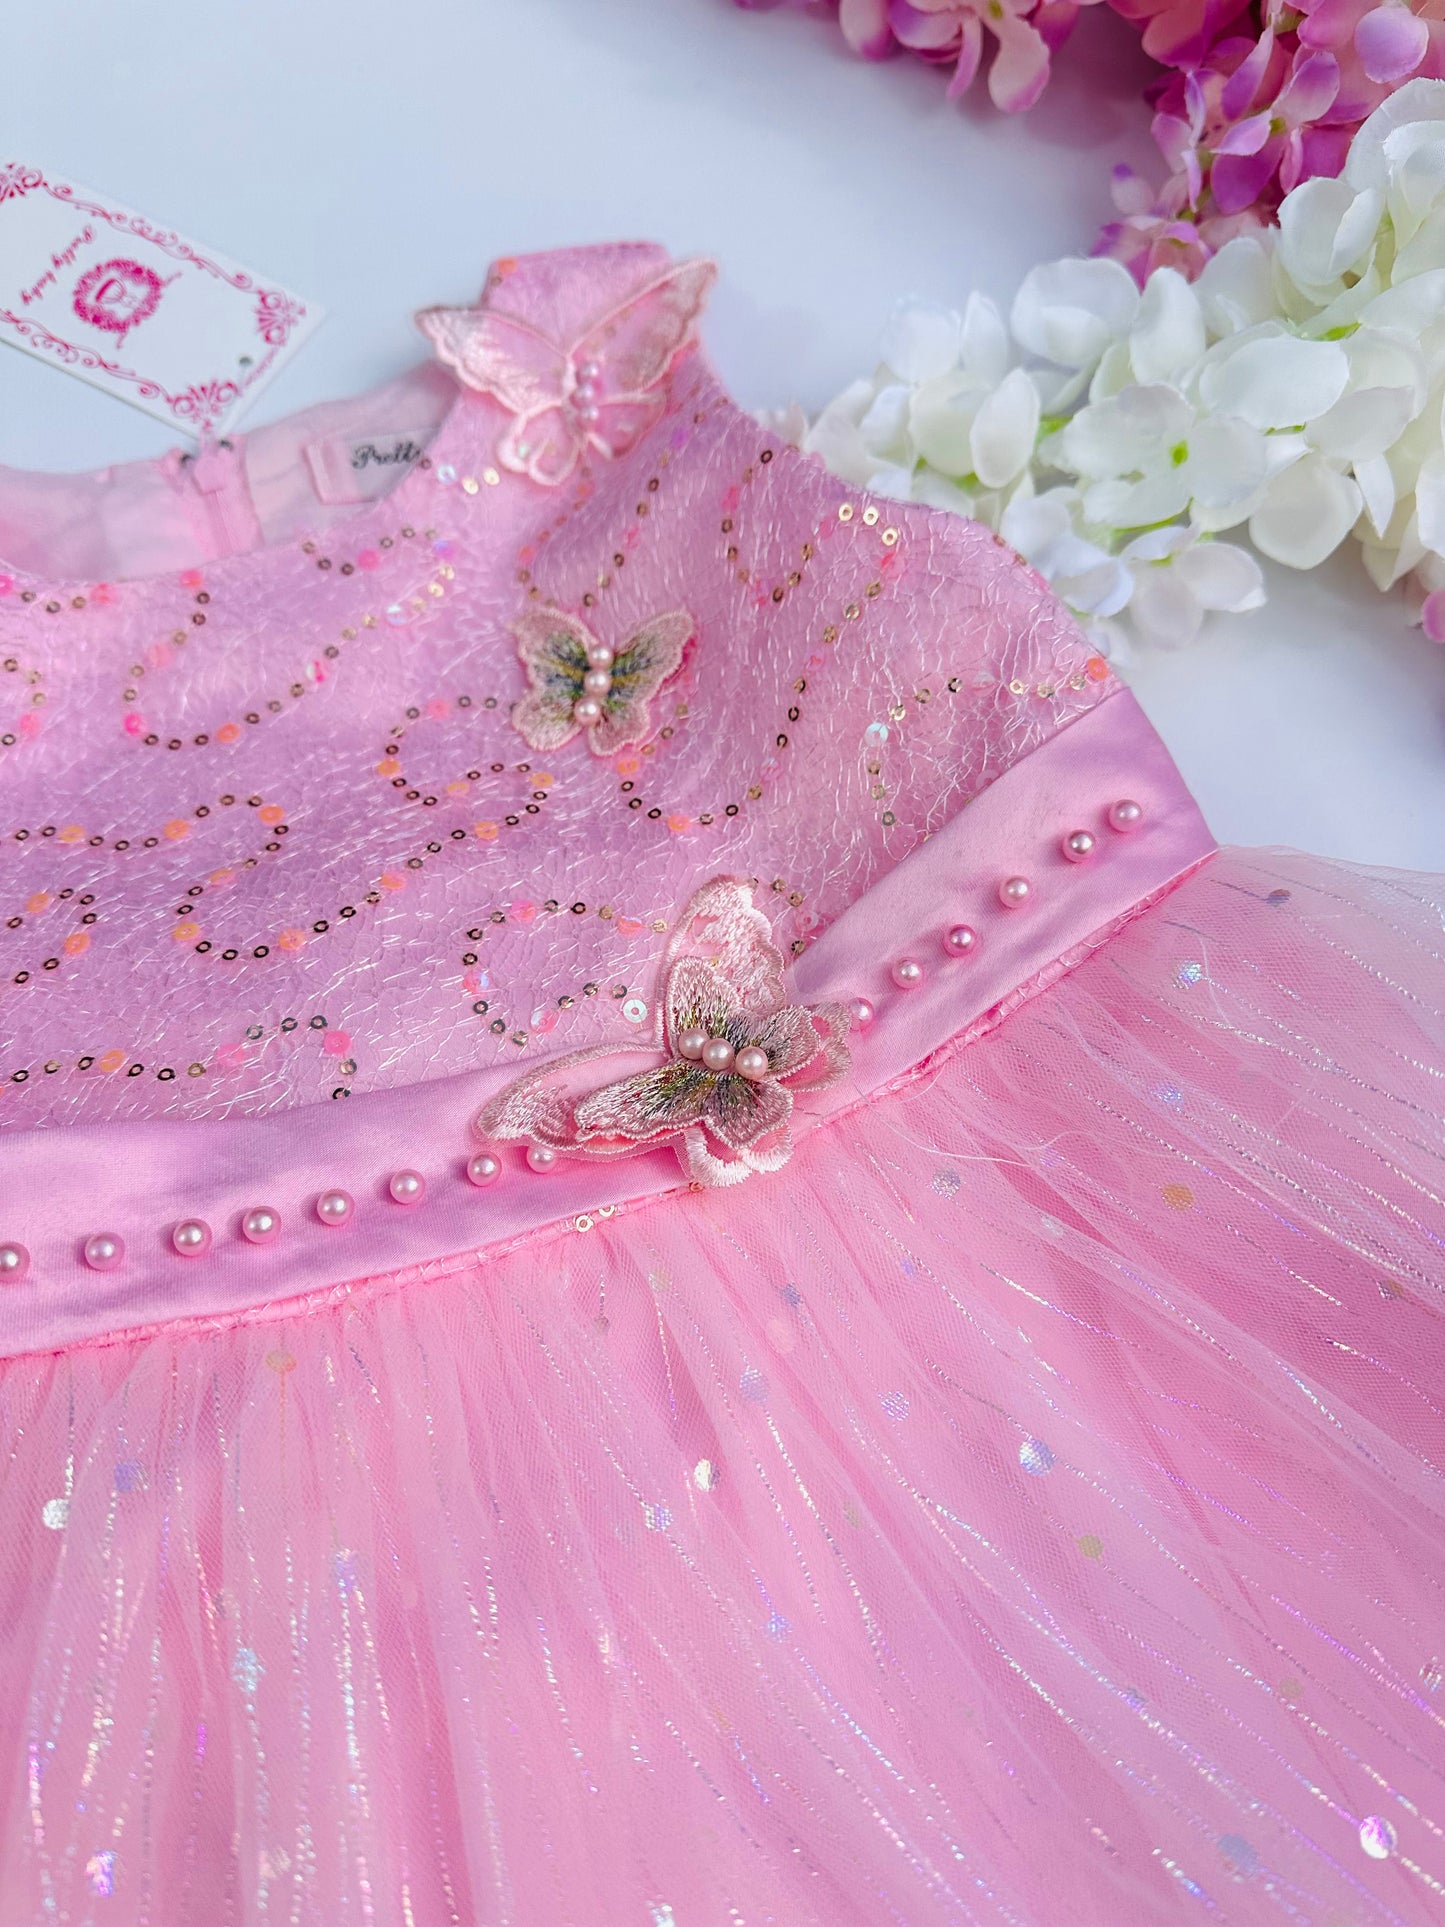 Pink Butterfly dress